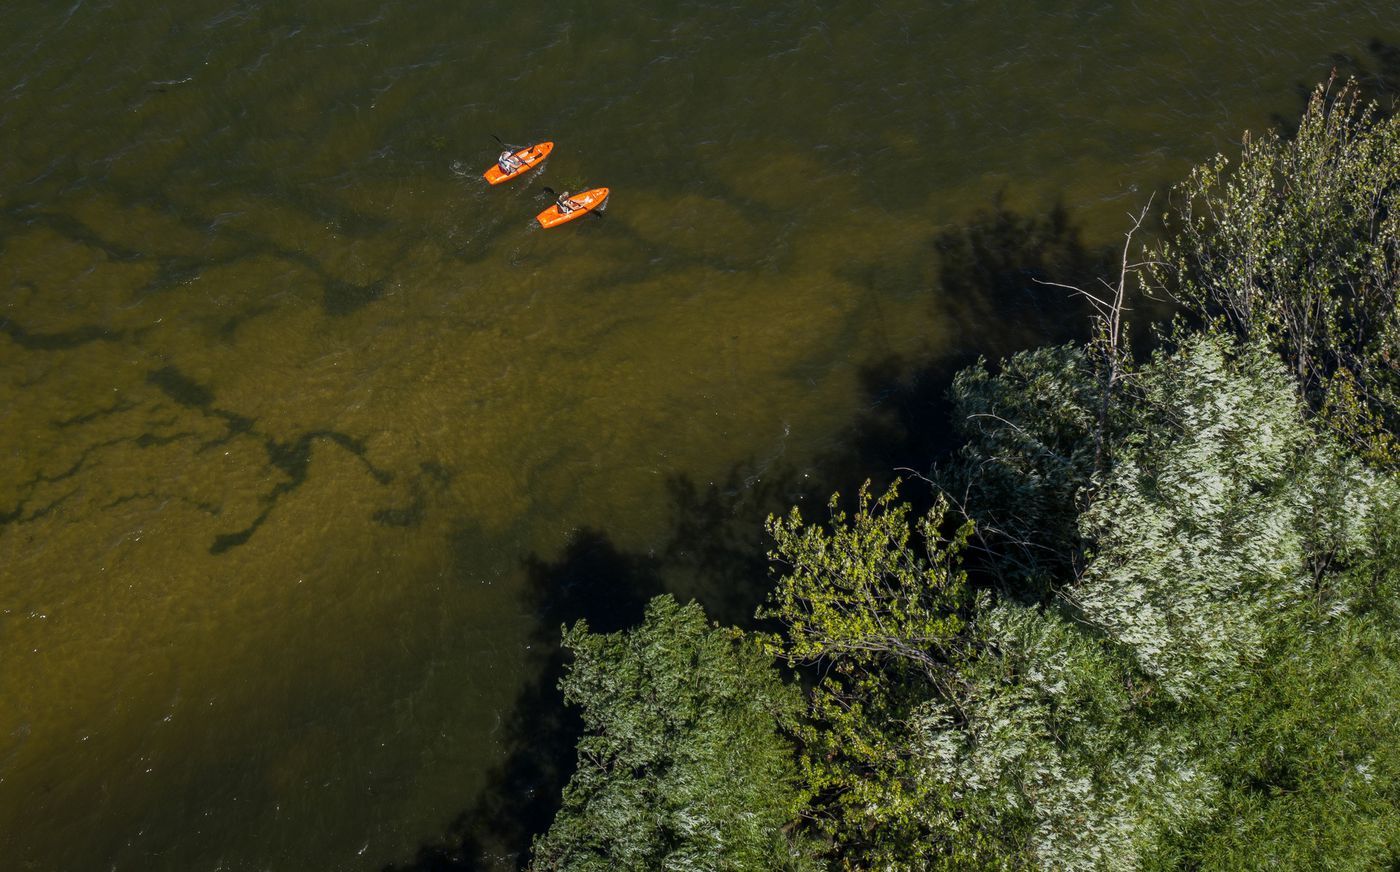 Kayakers enter Lake Ontario at Braddock Bay in Greece, New York. Image by Zbigniew Bzdak / Chicago Tribune. United States, 2020.